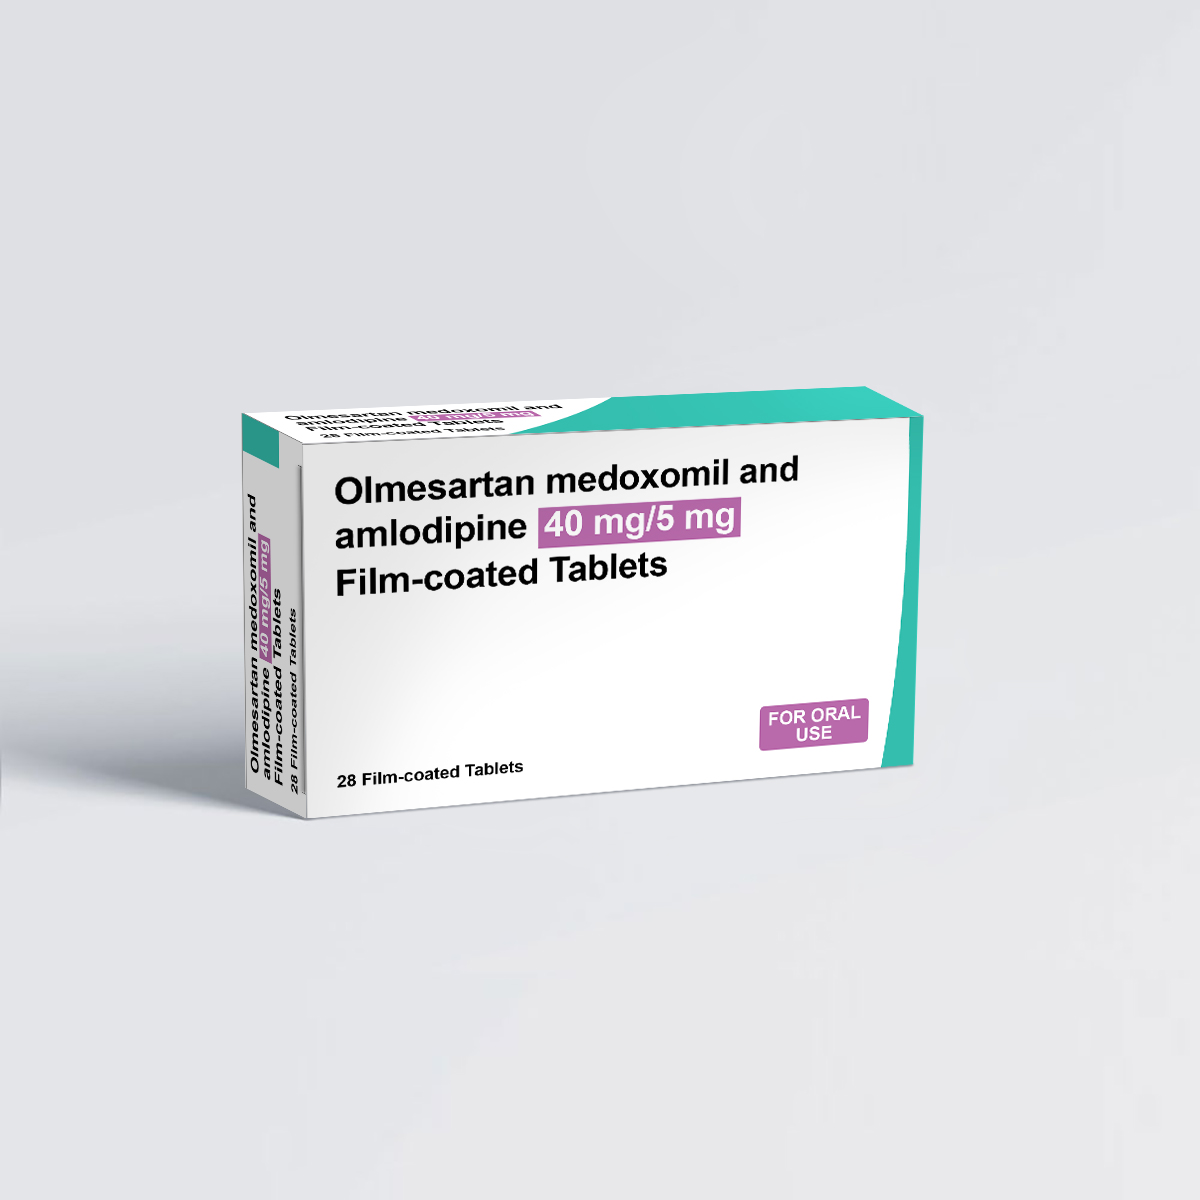 Presentation_Olmesartan medoxomil and amlodipine 40 mg-5 mg